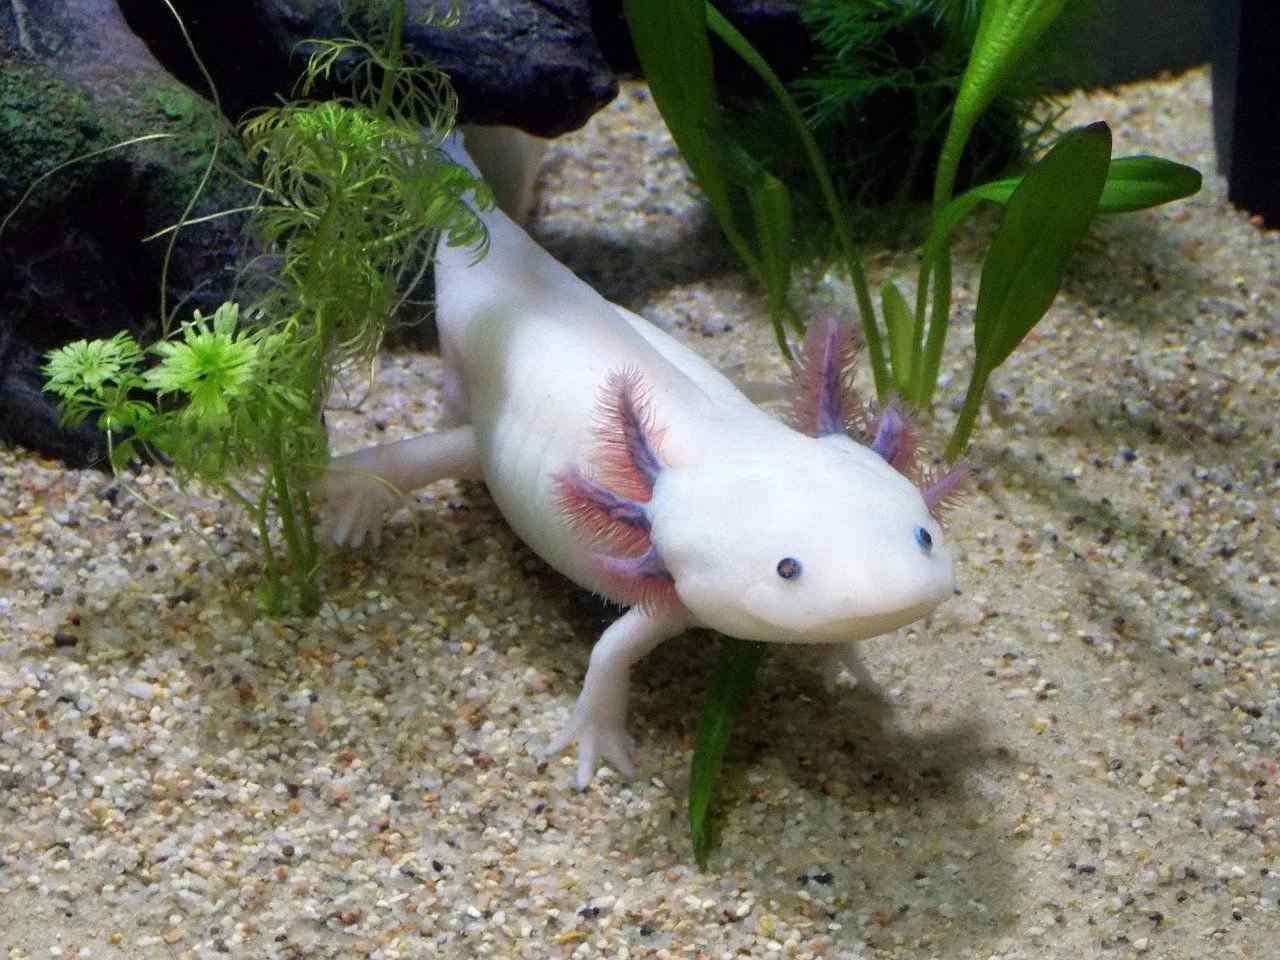 axolotls can also eat live fish